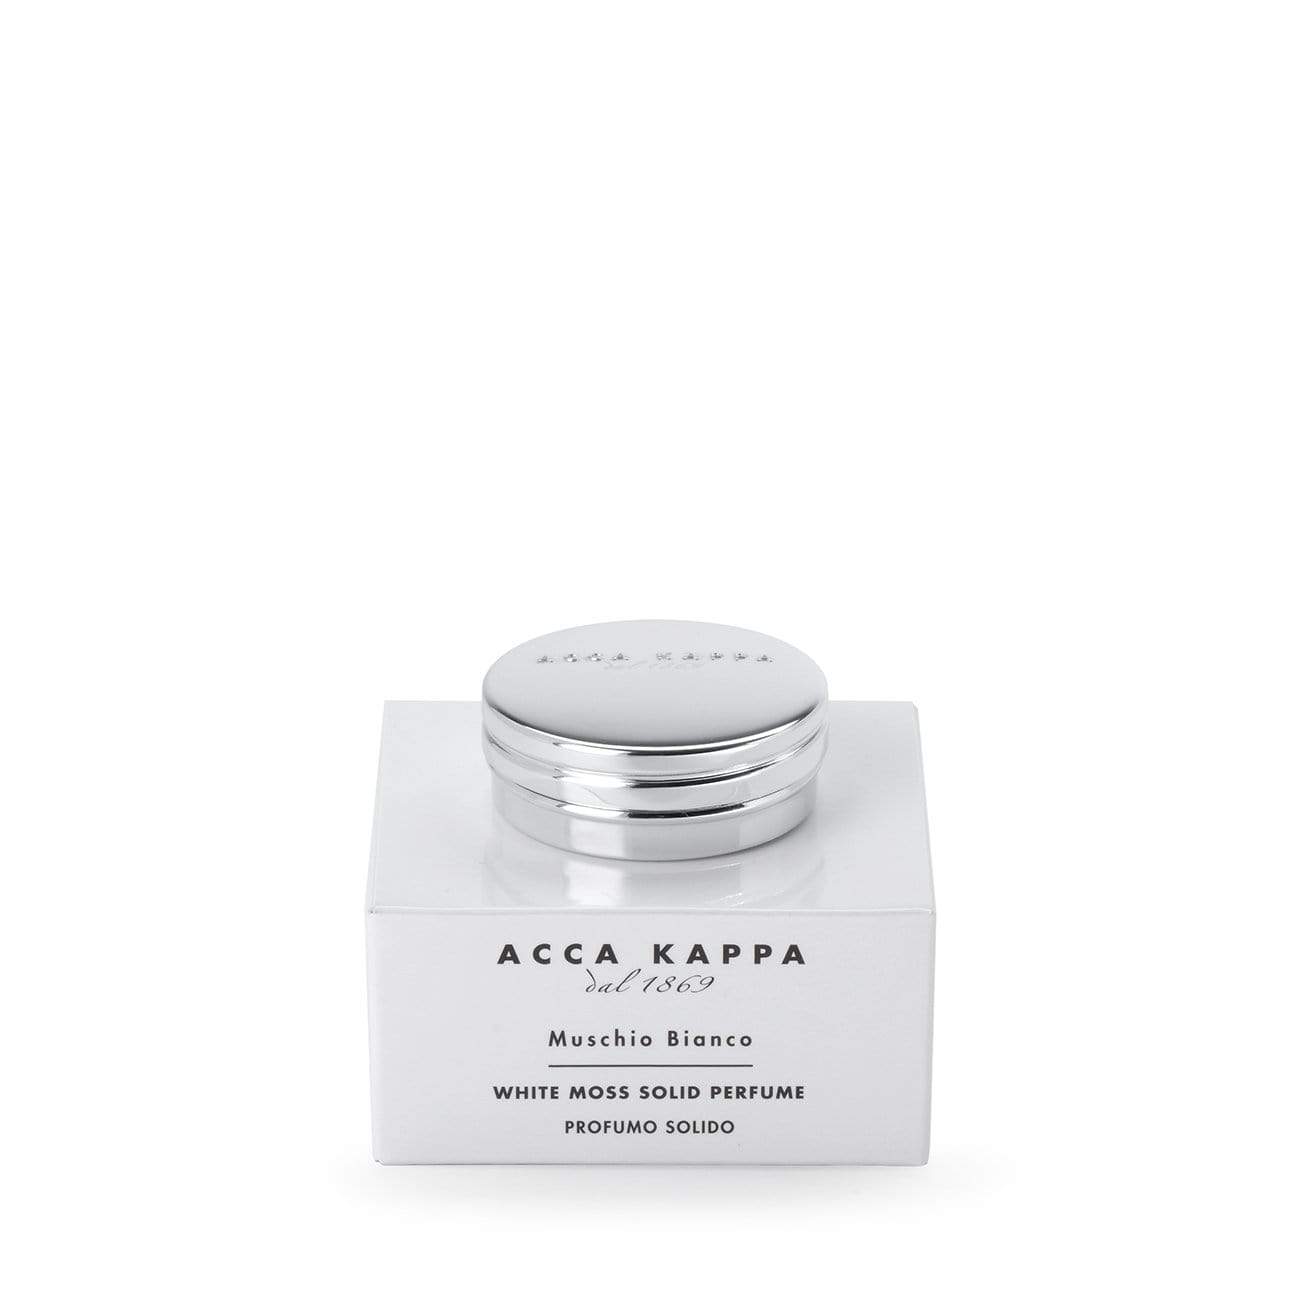 Acca Kappa White Moss Solid Perfume